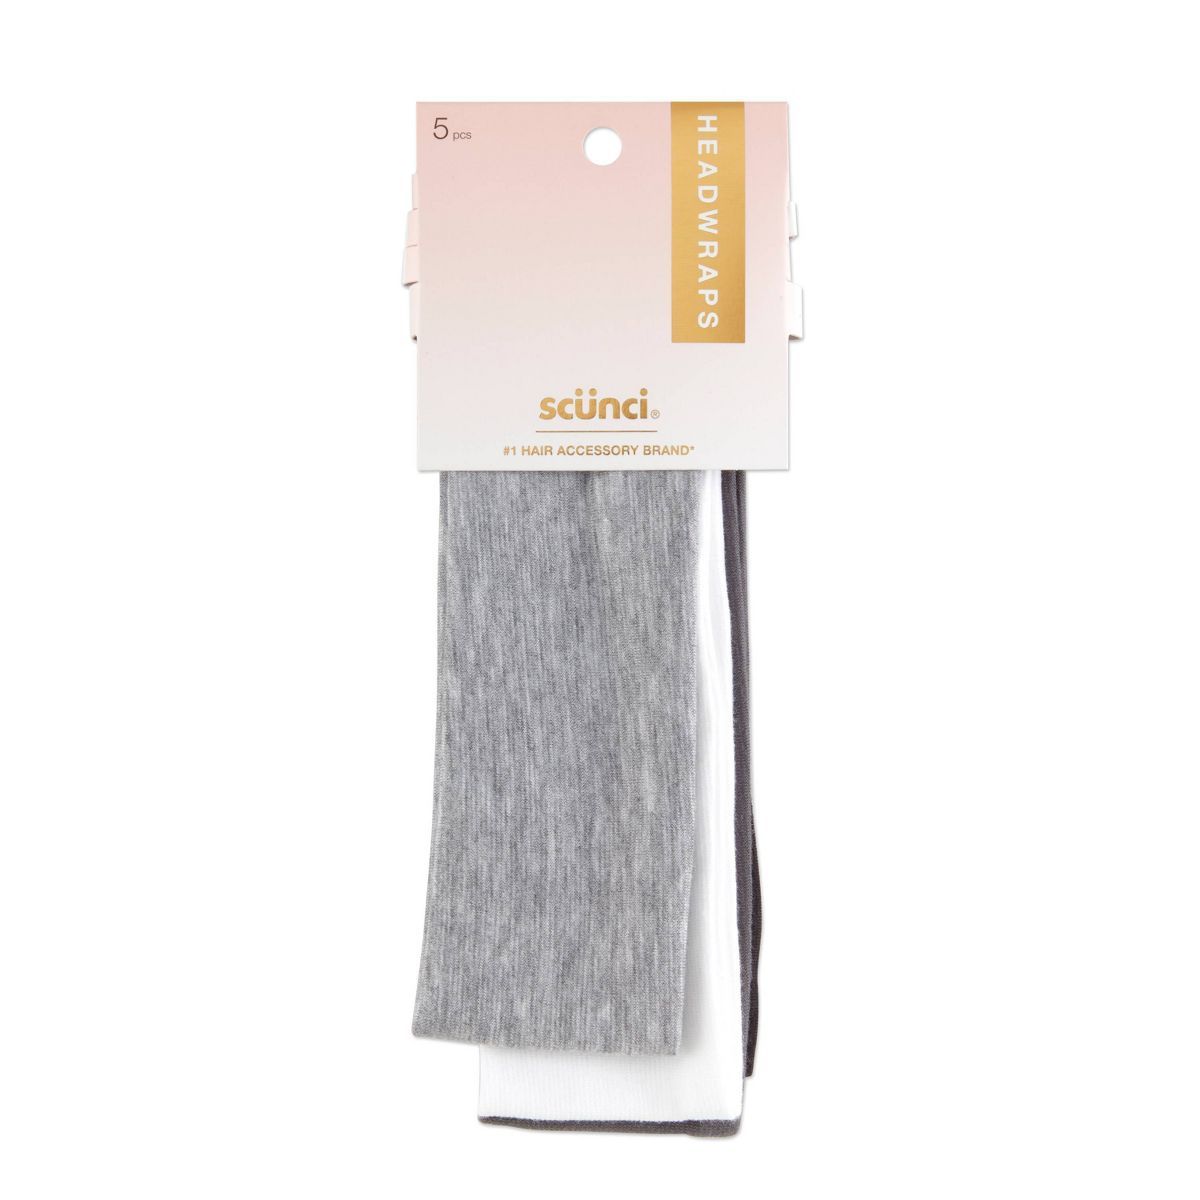 scünci No Damage Stretch Fabric Headbands - Neutral - All Hair - 5pk | Target